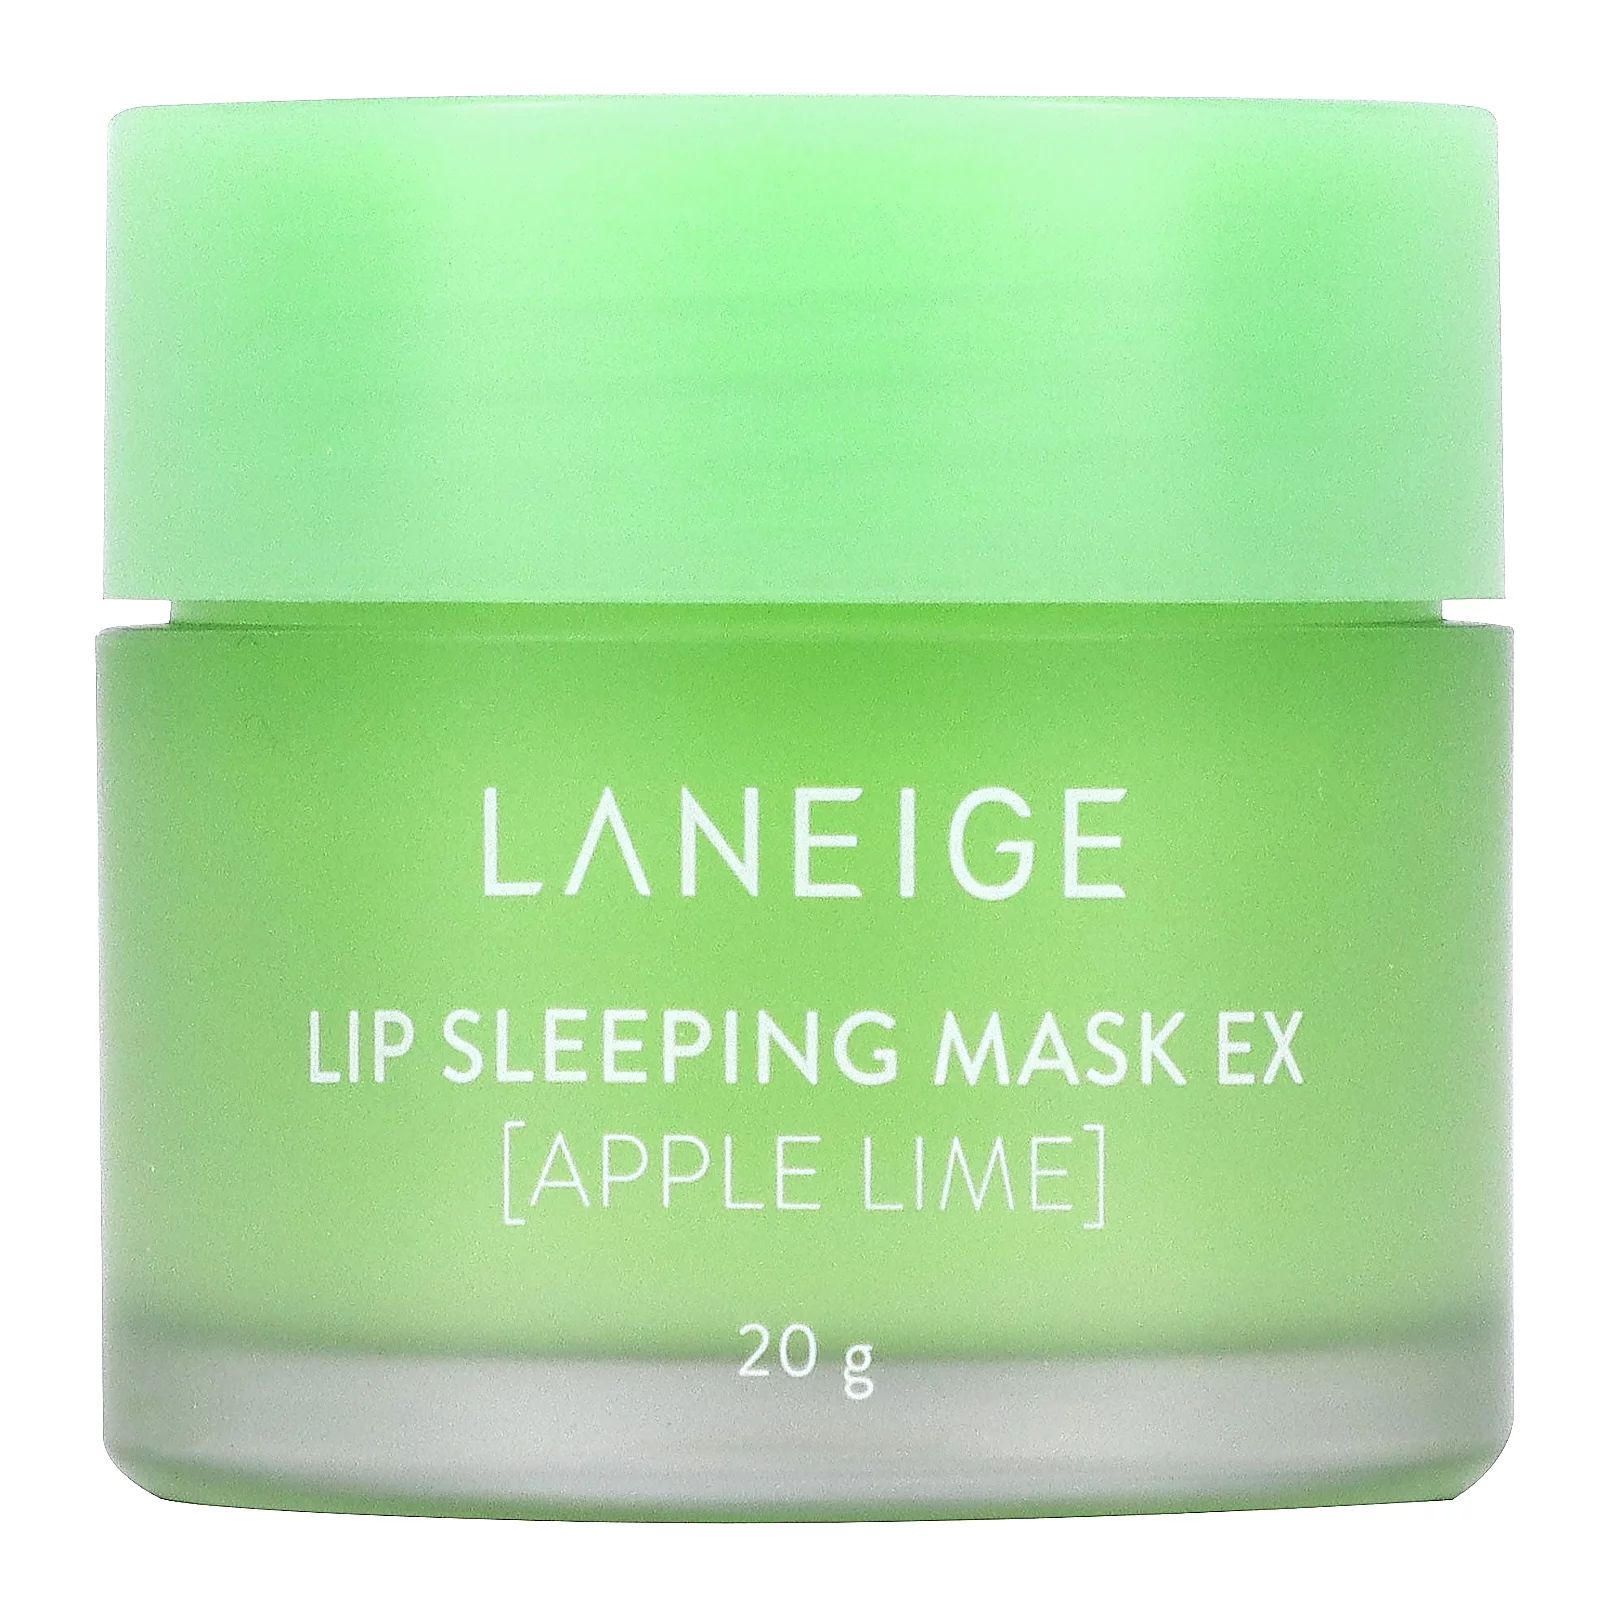 Lip Sleeping Mask Ex, Apple Lime, 20 g, Laneige | Walmart (US)